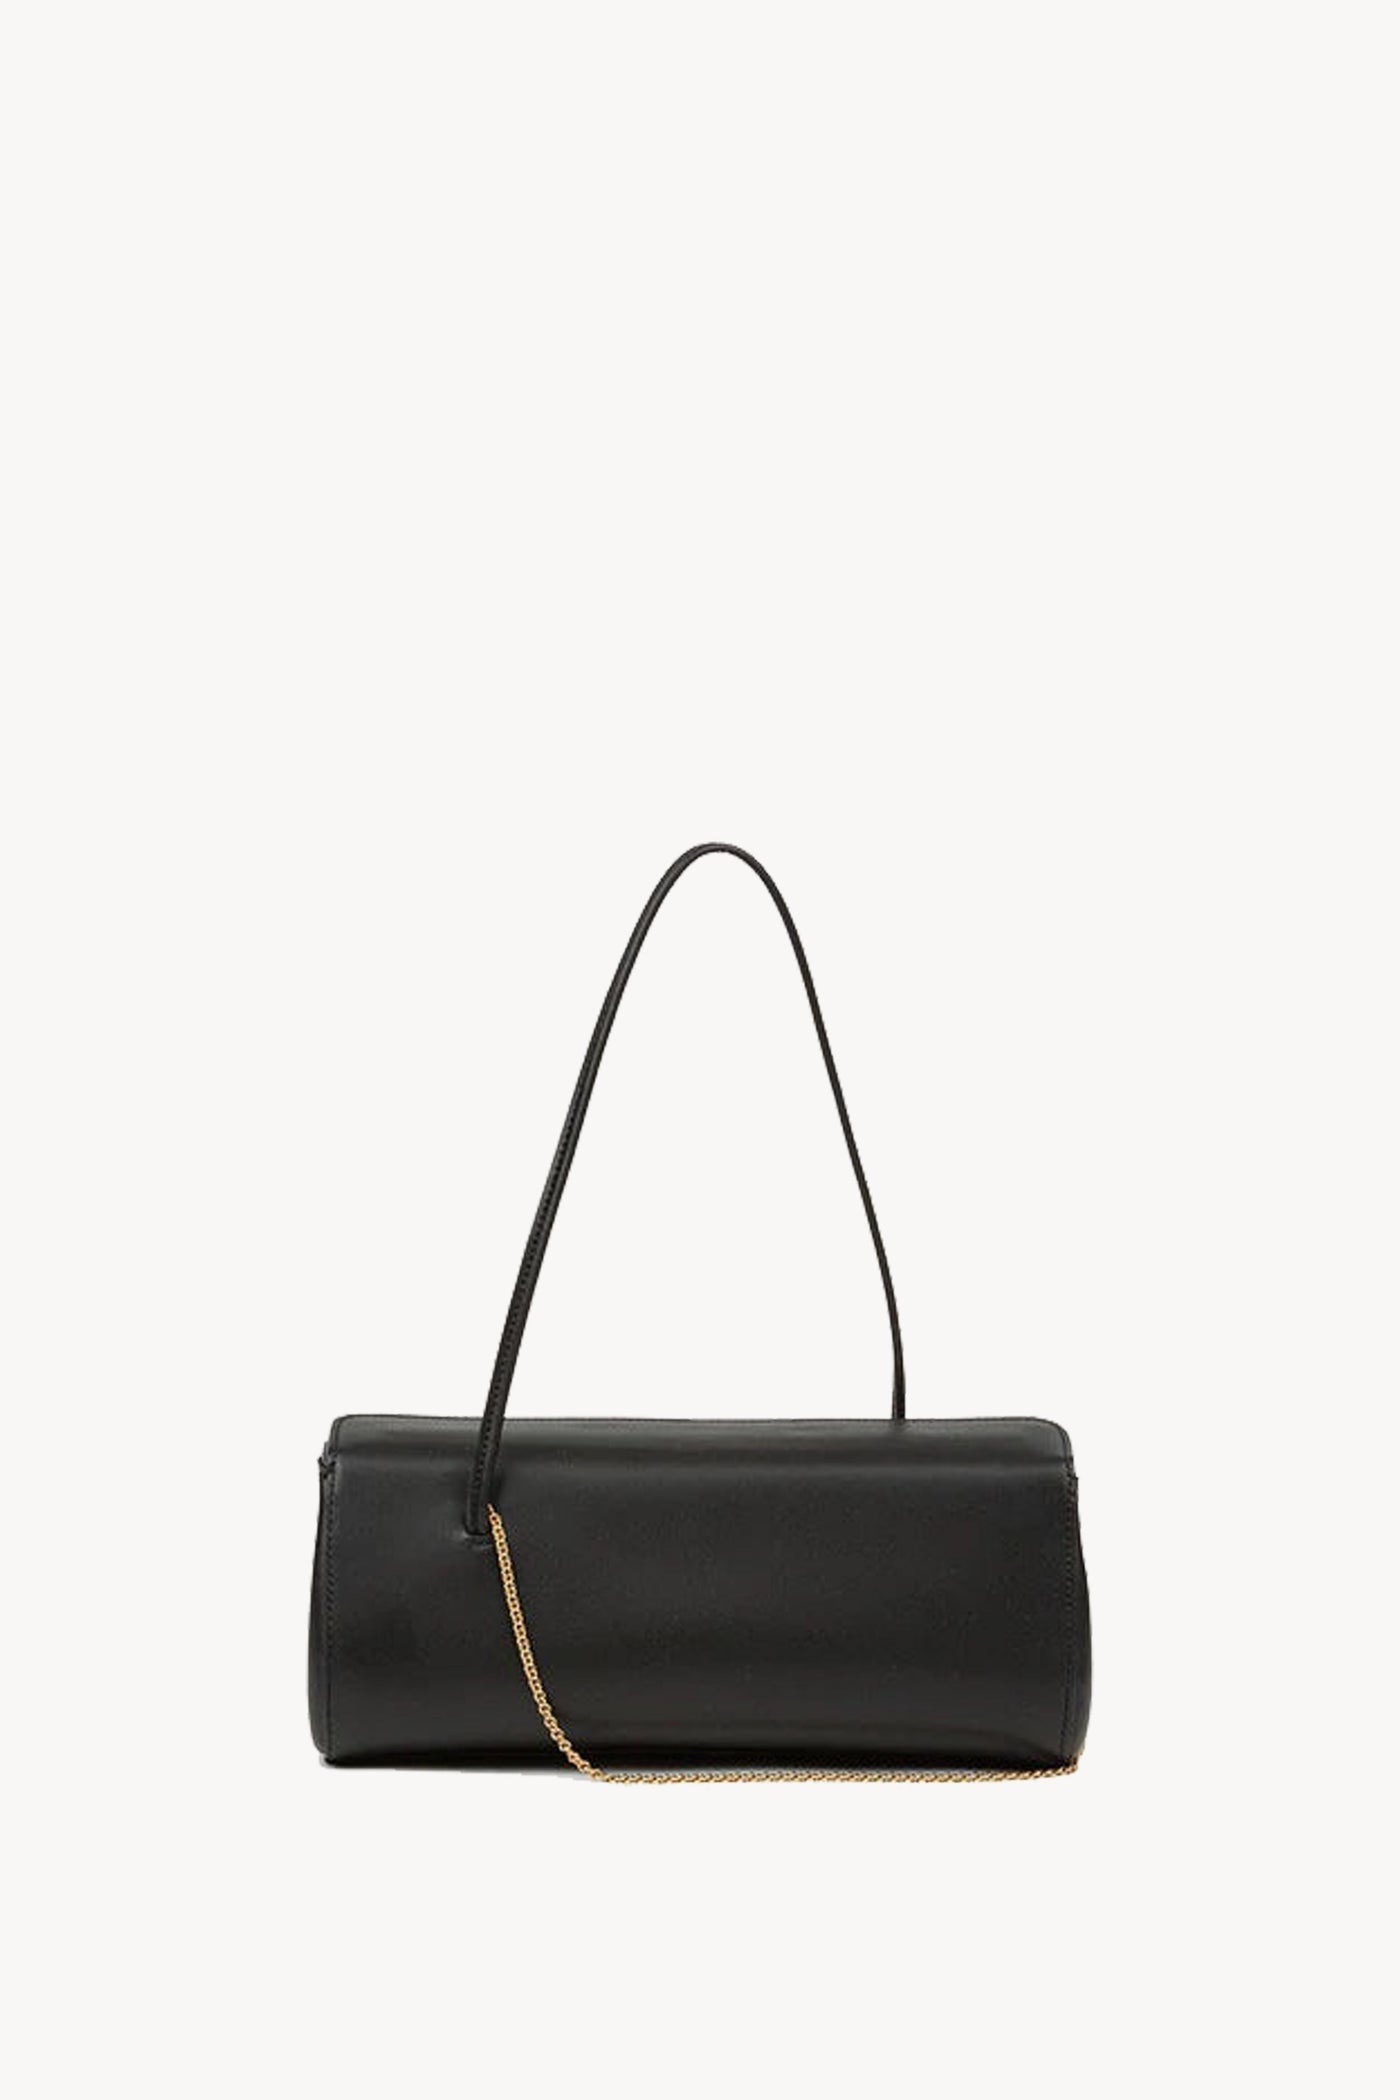 Pencil Case Bag Black - Little Liffner - Ileana Makri store